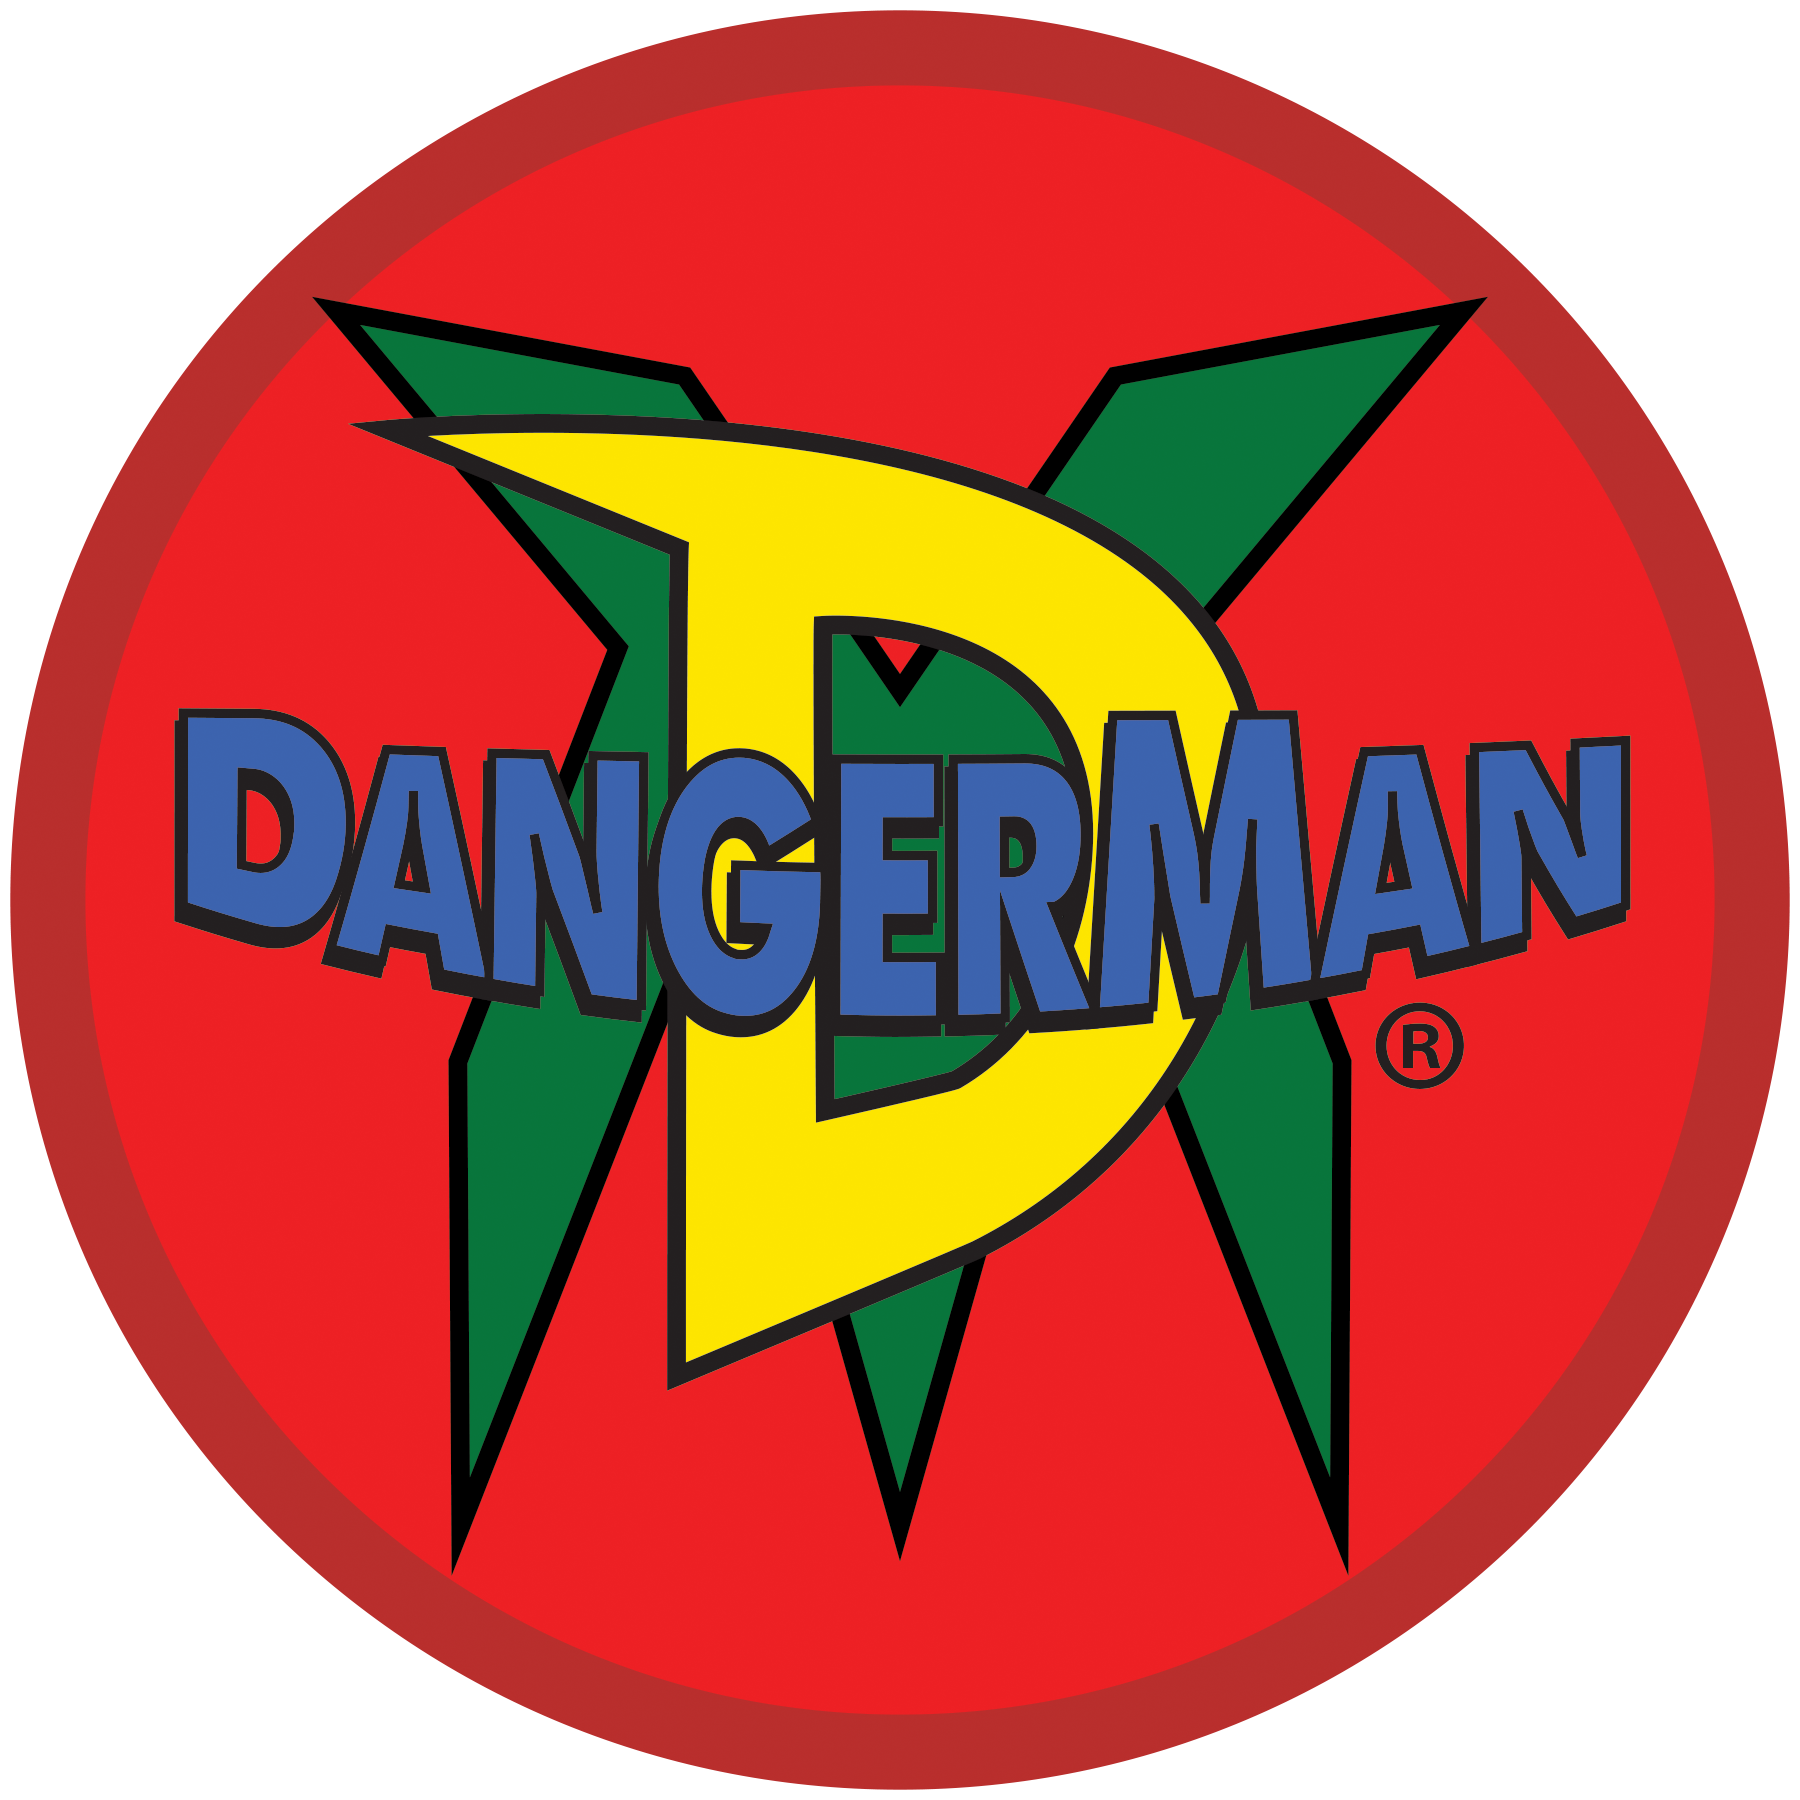 DangerMan the Urban Superhero, Updates to combat Hate